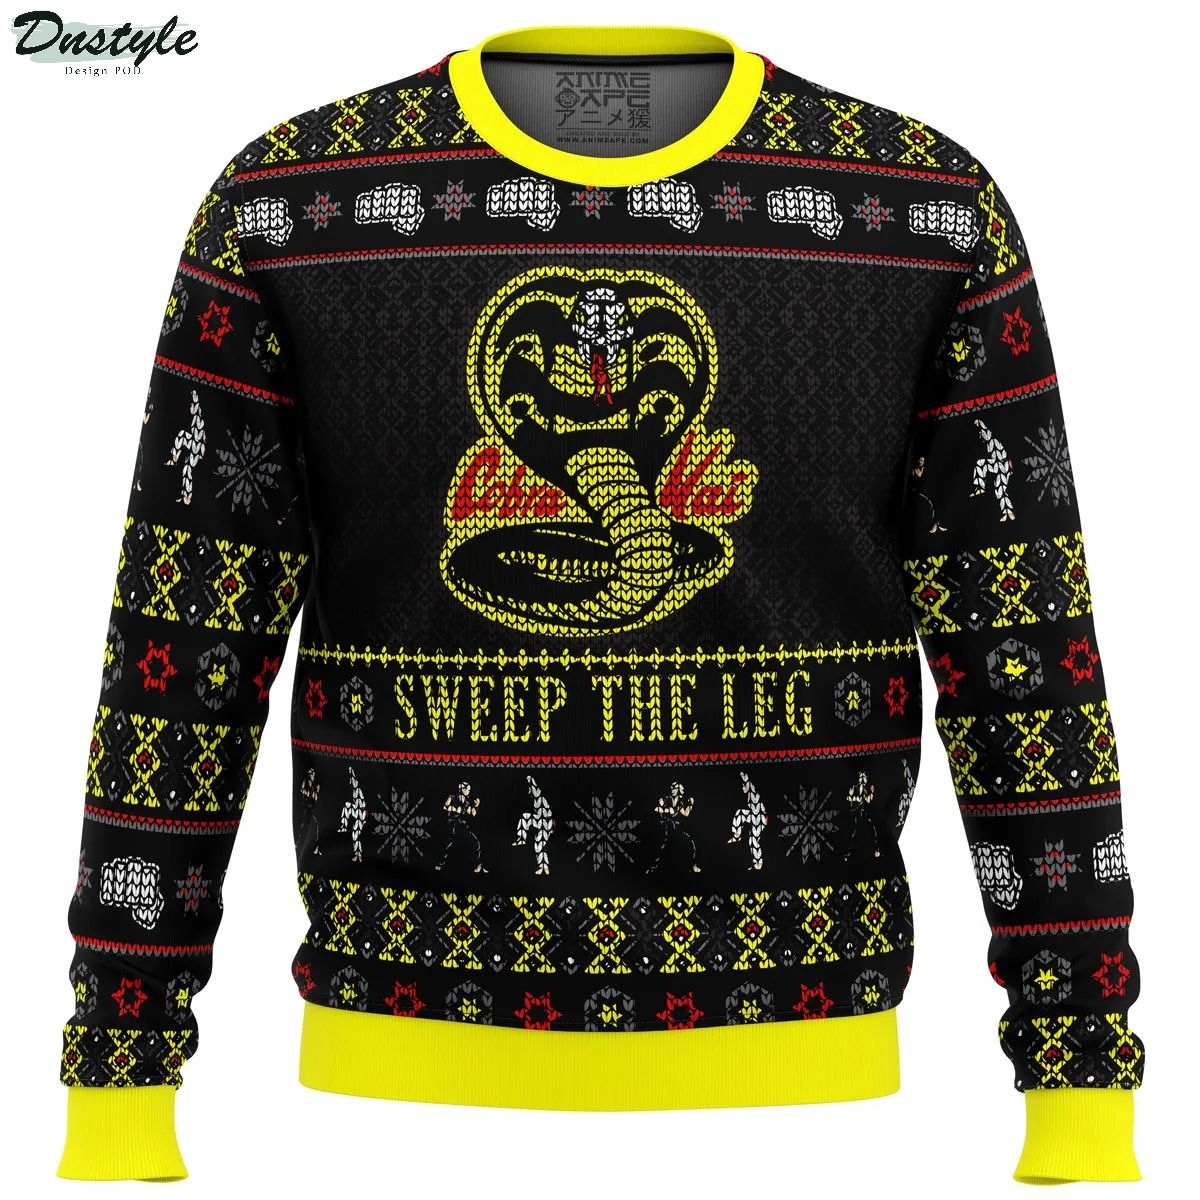 Cobra Kai Sweep The Leg Karate Kid Ugly Christmas Sweater